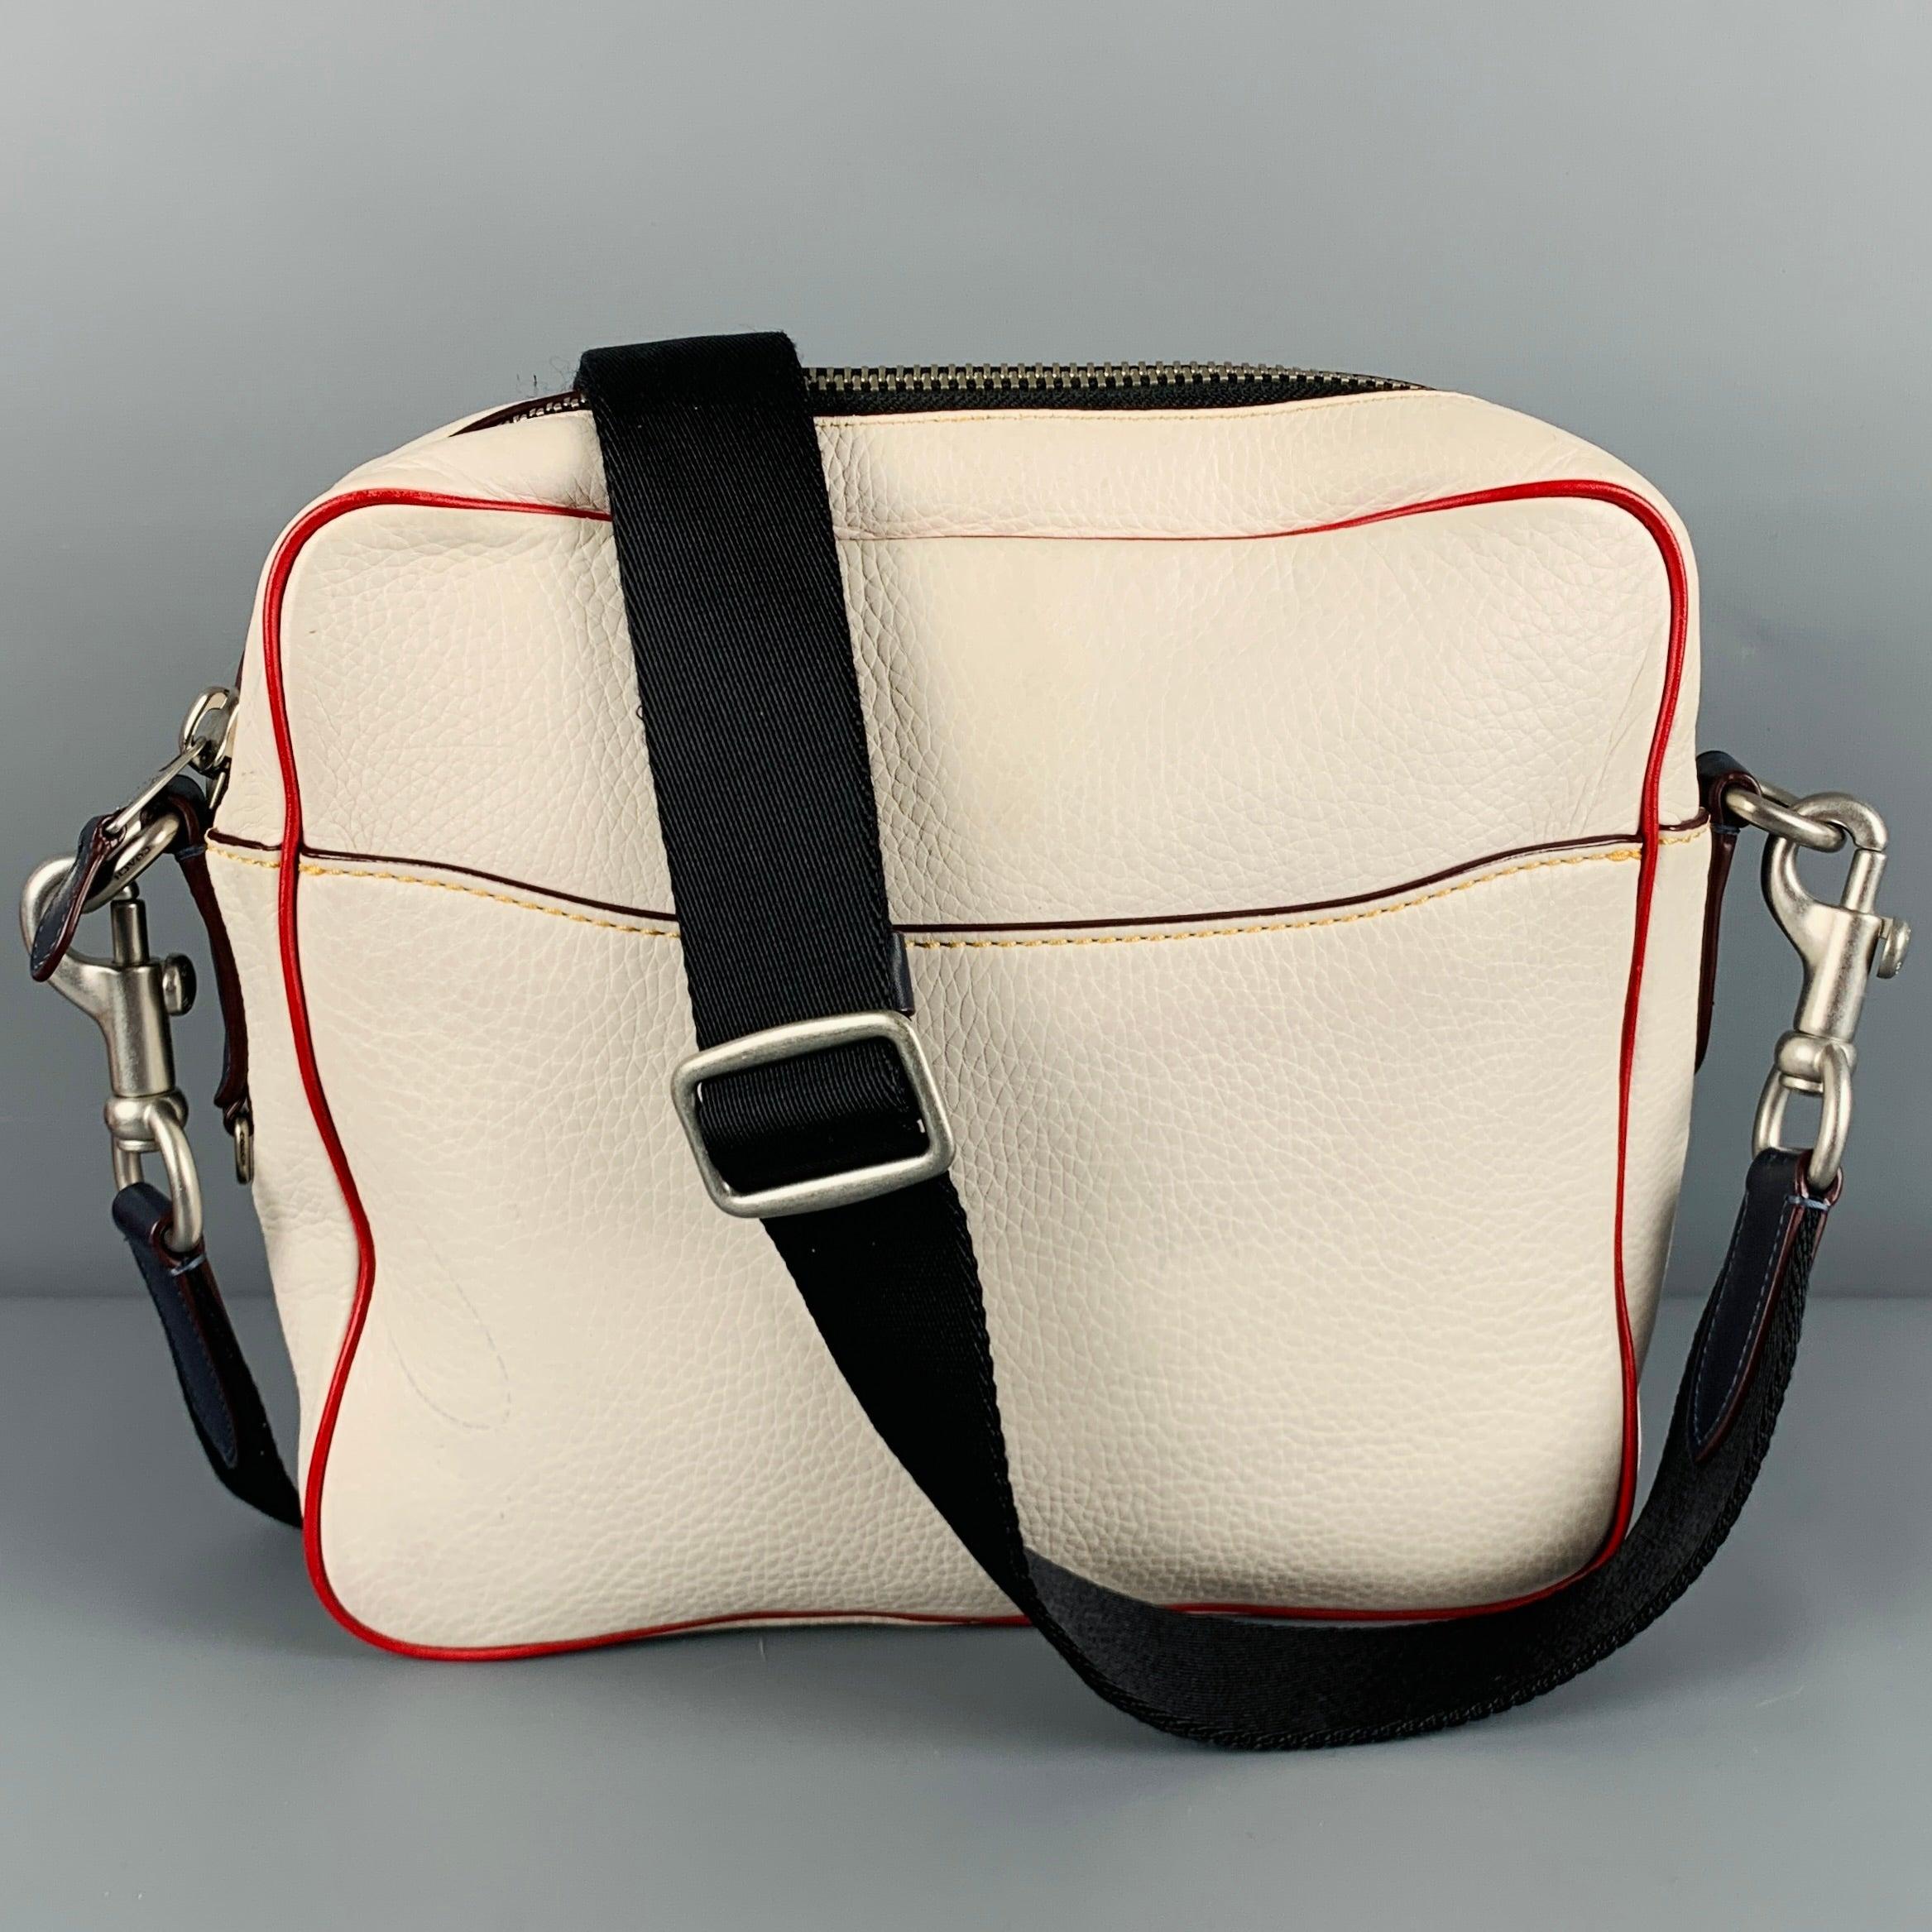 COACH x NASA White Multi Color Logo Pebble Grain Leather Bag In Good Condition For Sale In San Francisco, CA